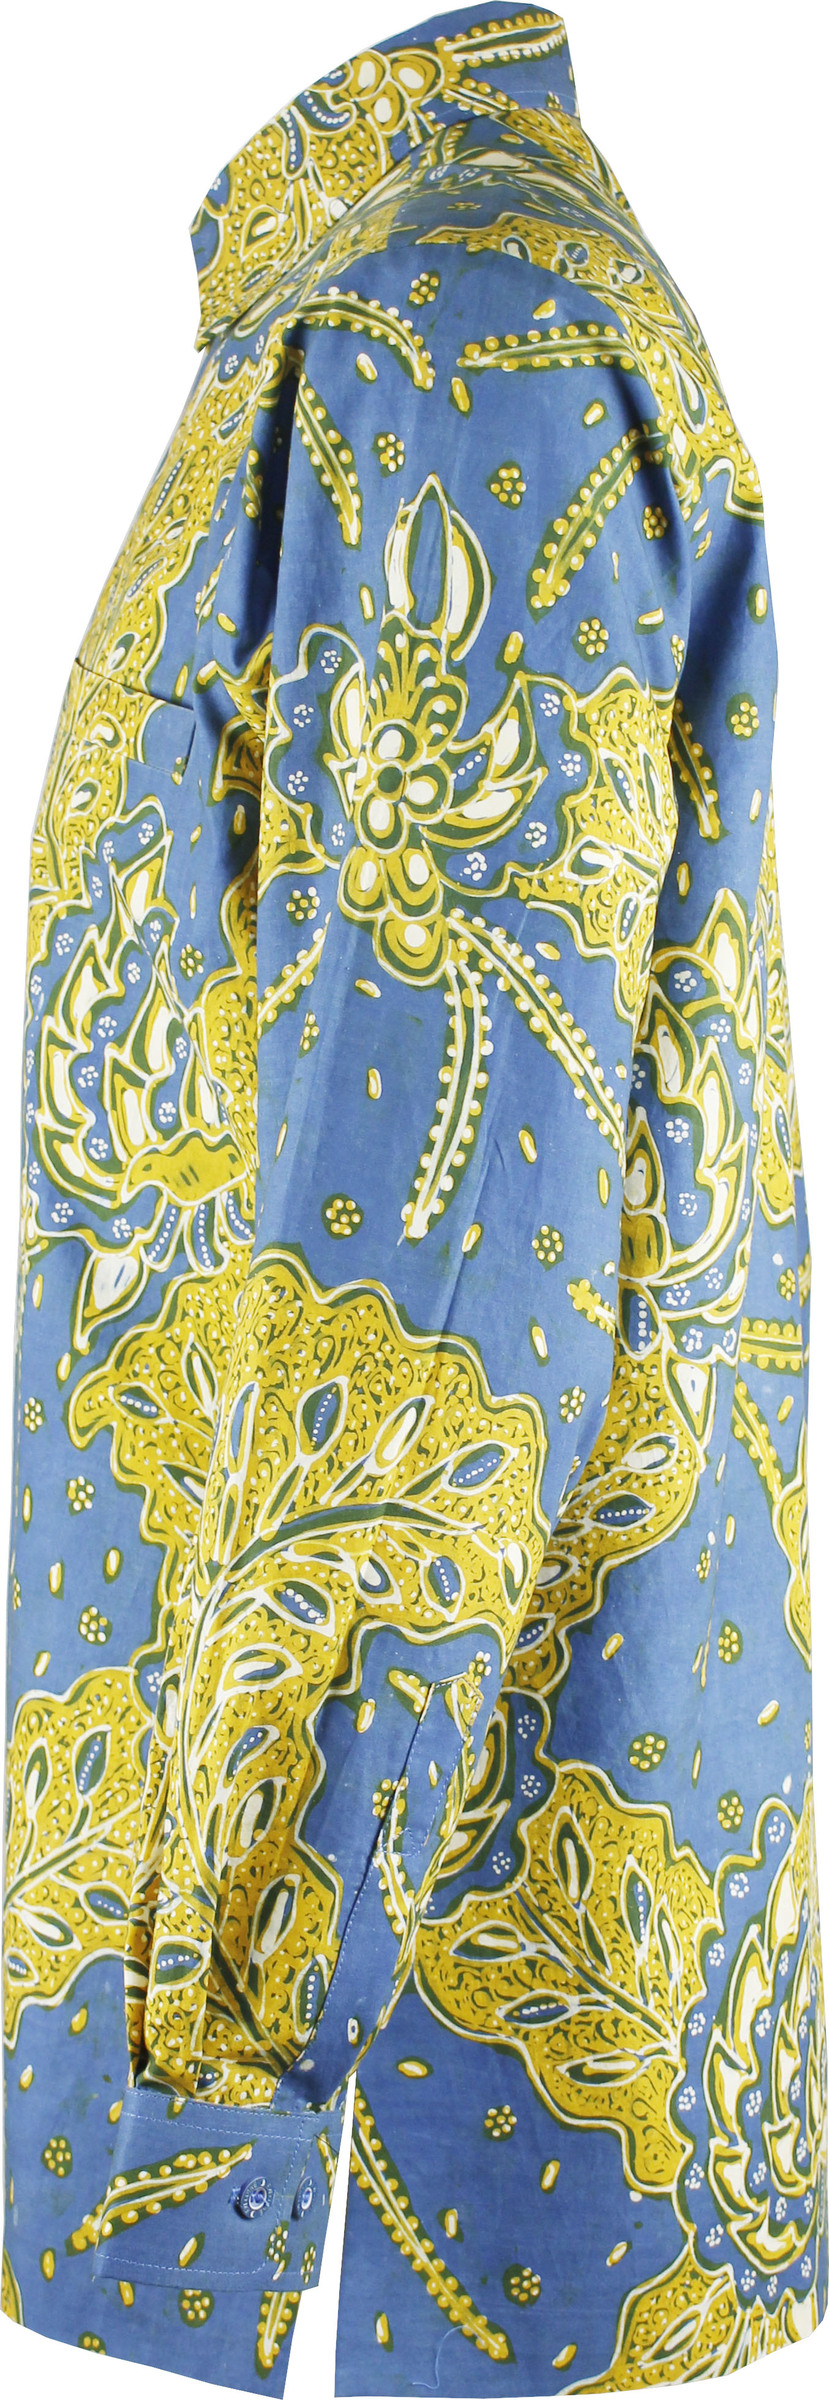  Batik  Tulis  Pewarna Alam Floral Indigo  Kuning Tenun eBoon